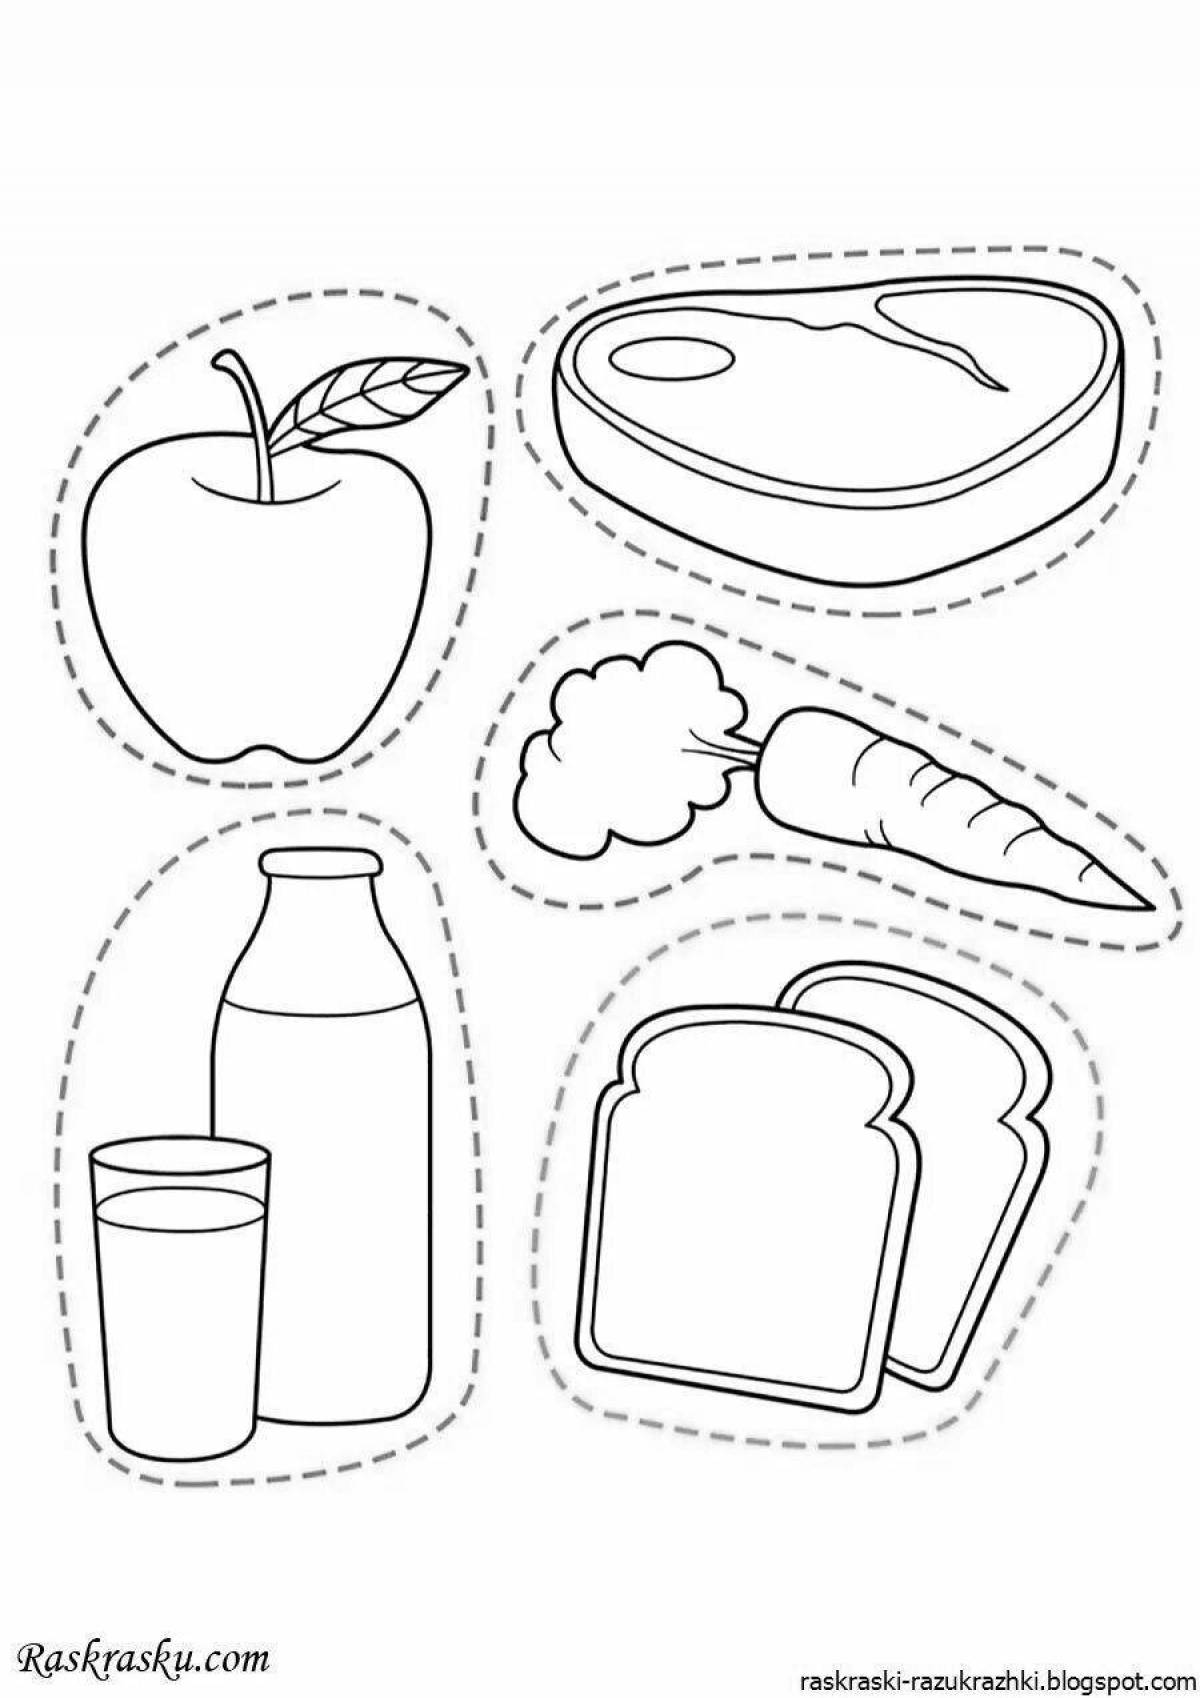 Appetizing healthy food coloring book for kindergarten kids